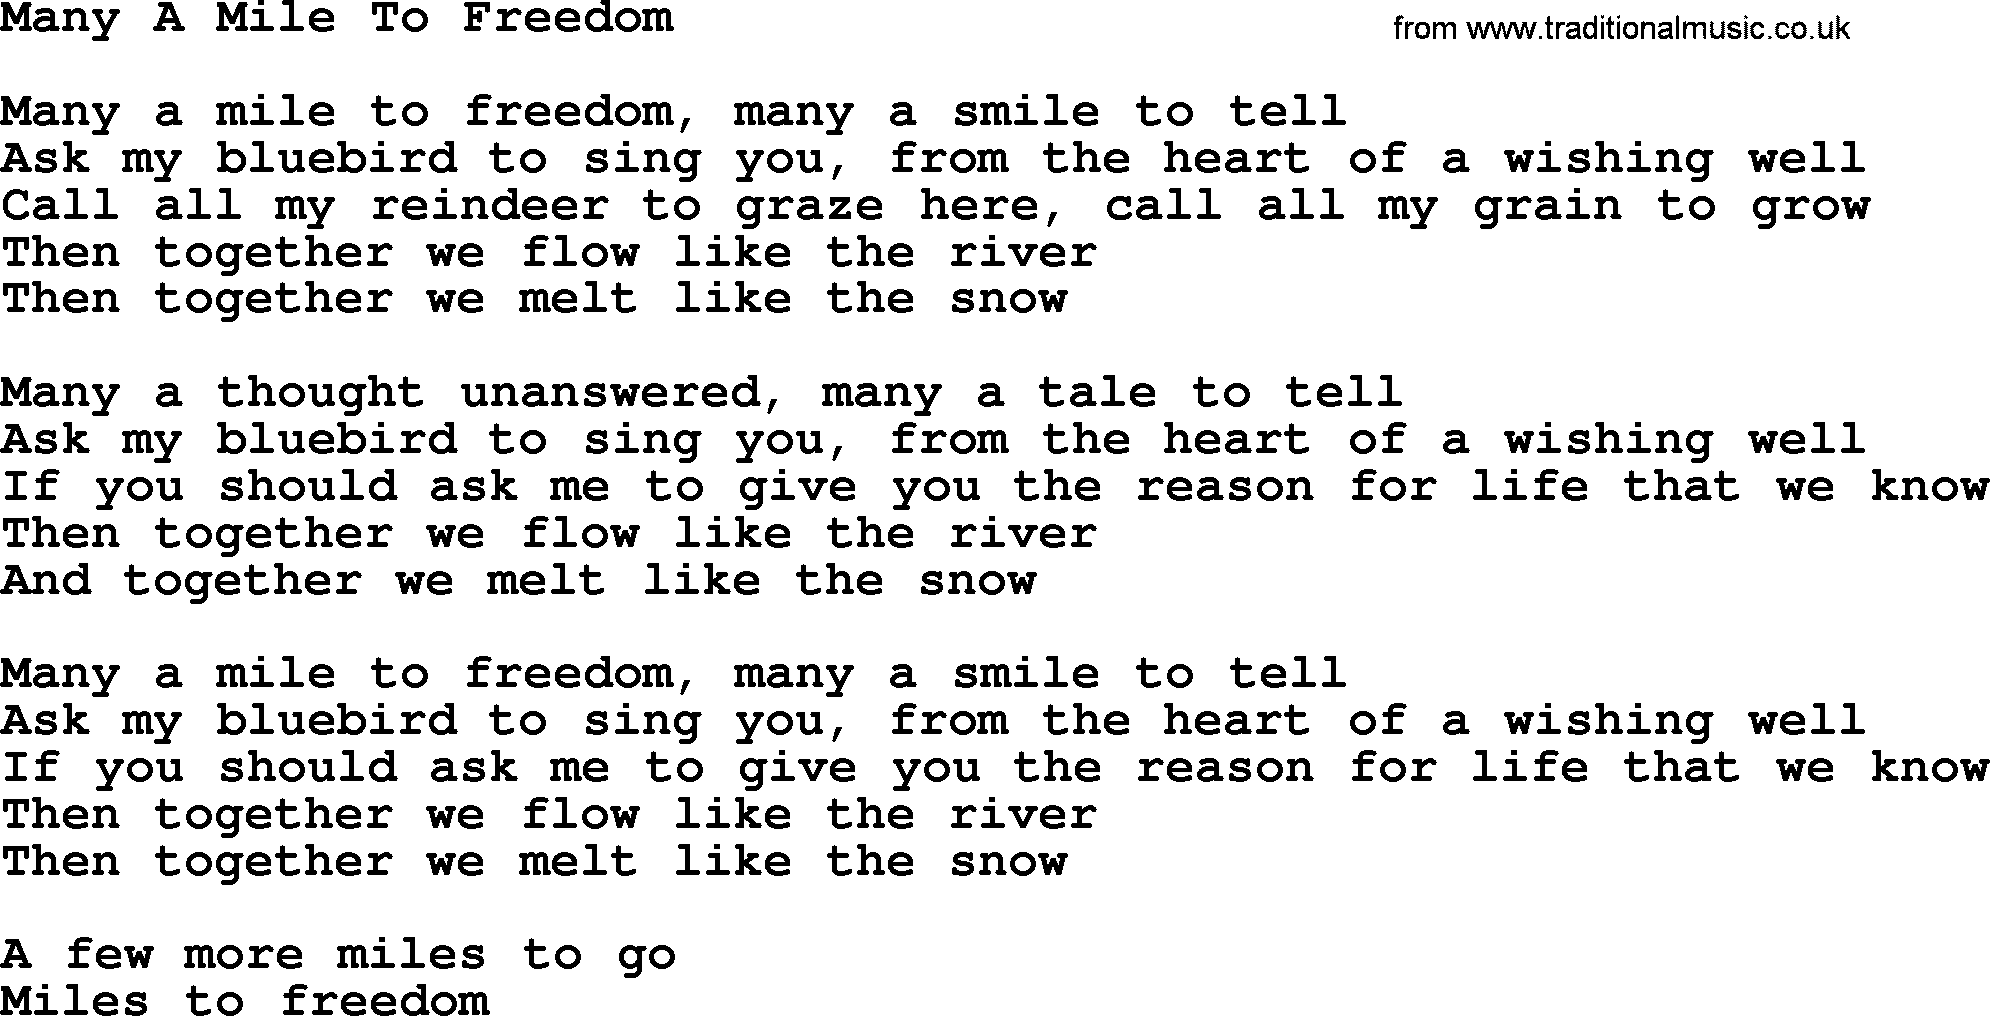 Joan Baez song Many A Mile To Freedom, lyrics